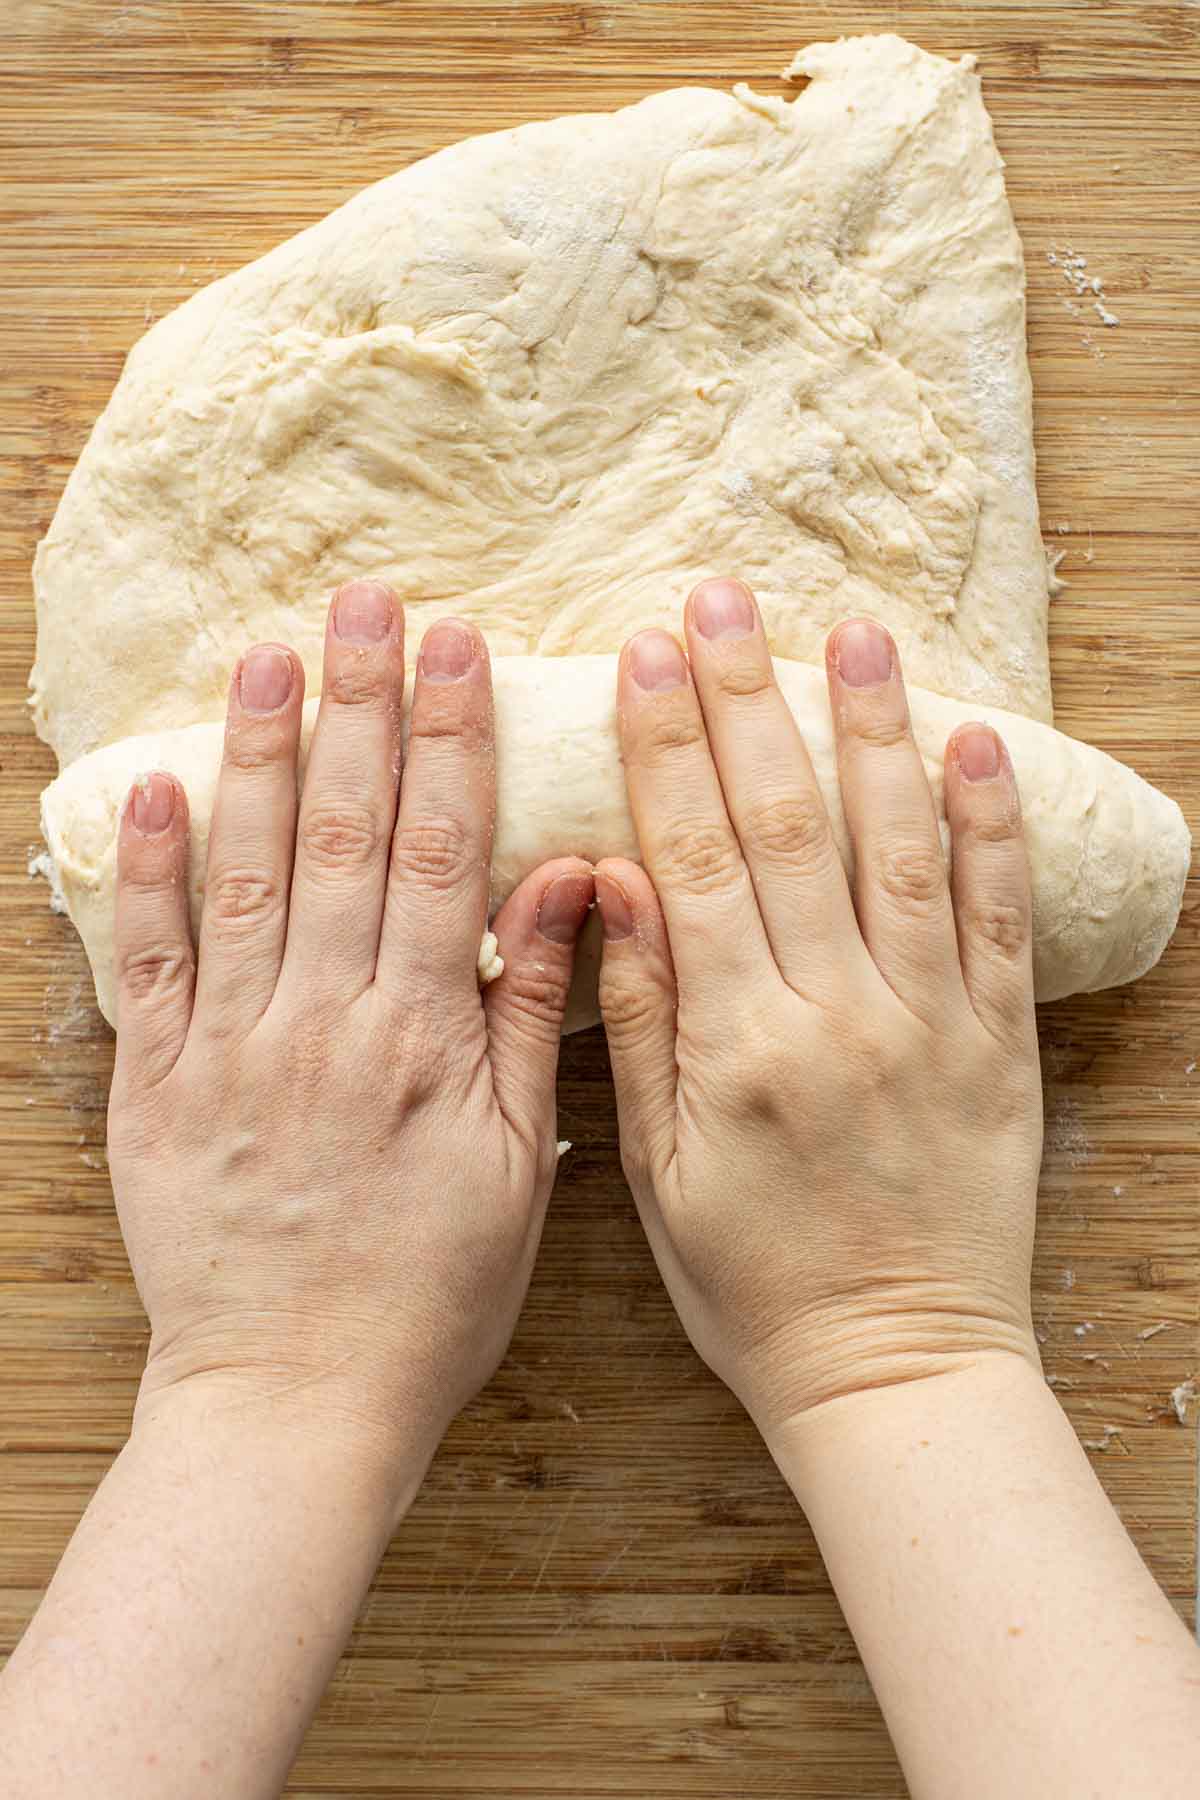 Rolling opened dough over itself.